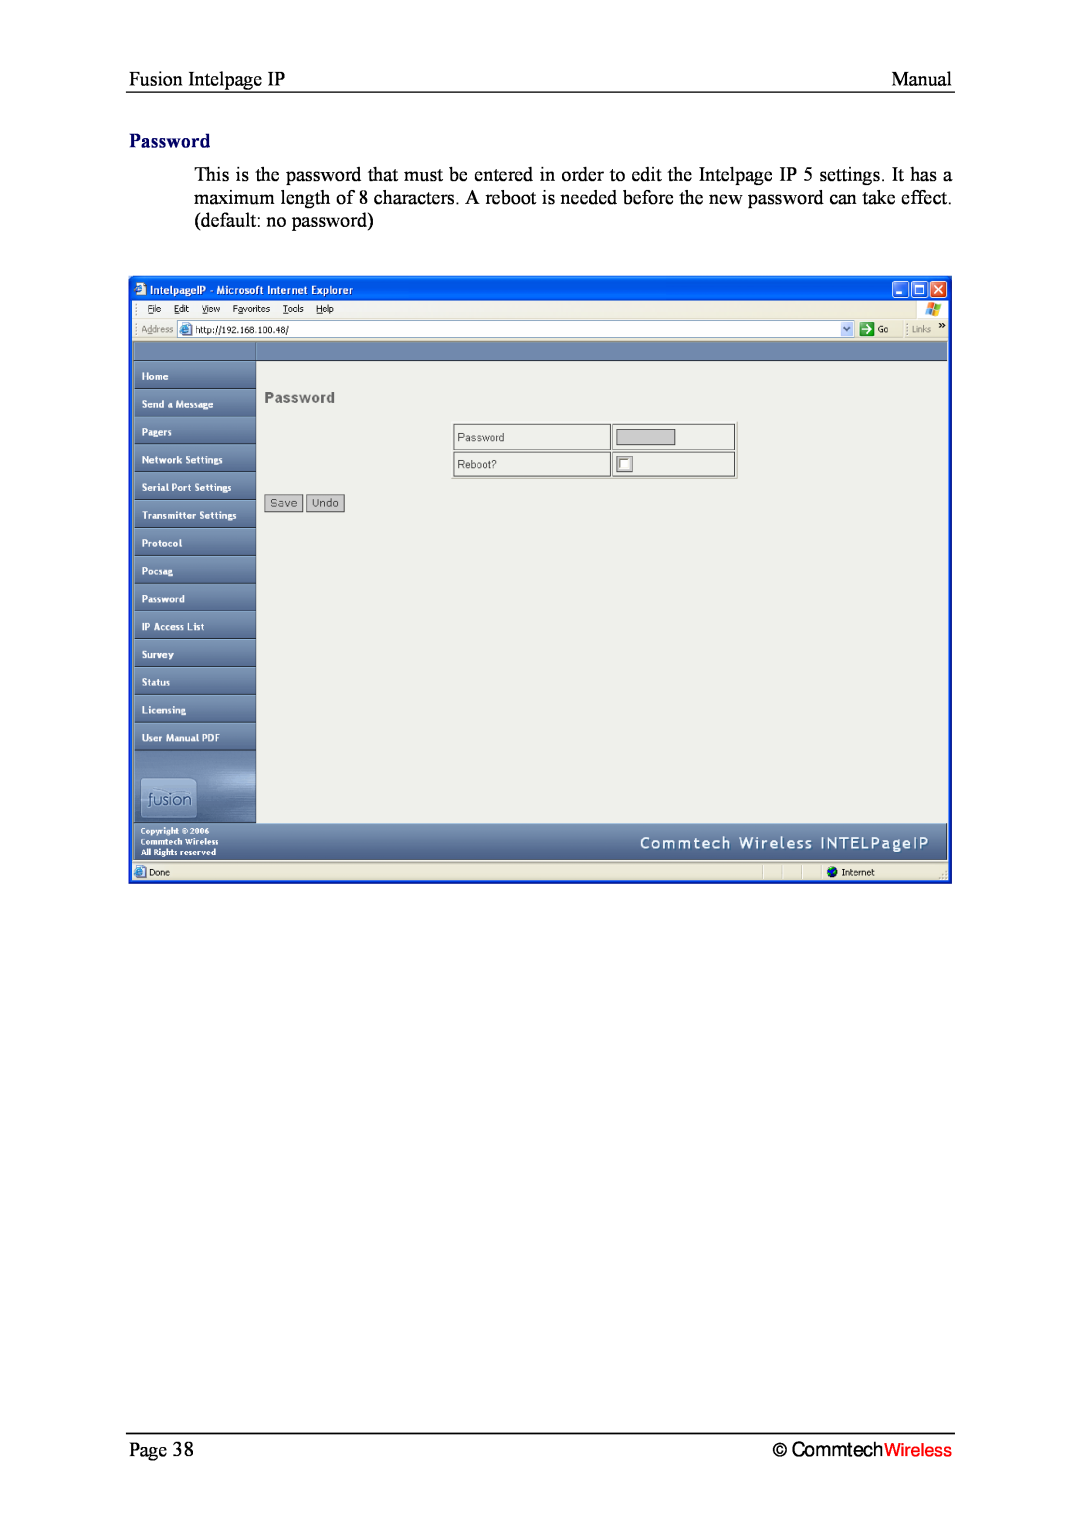 Fusion 2.1, INTELPage IP 5 manual Fusion Intelpage IP, Manual, Password, CommtechWireless 